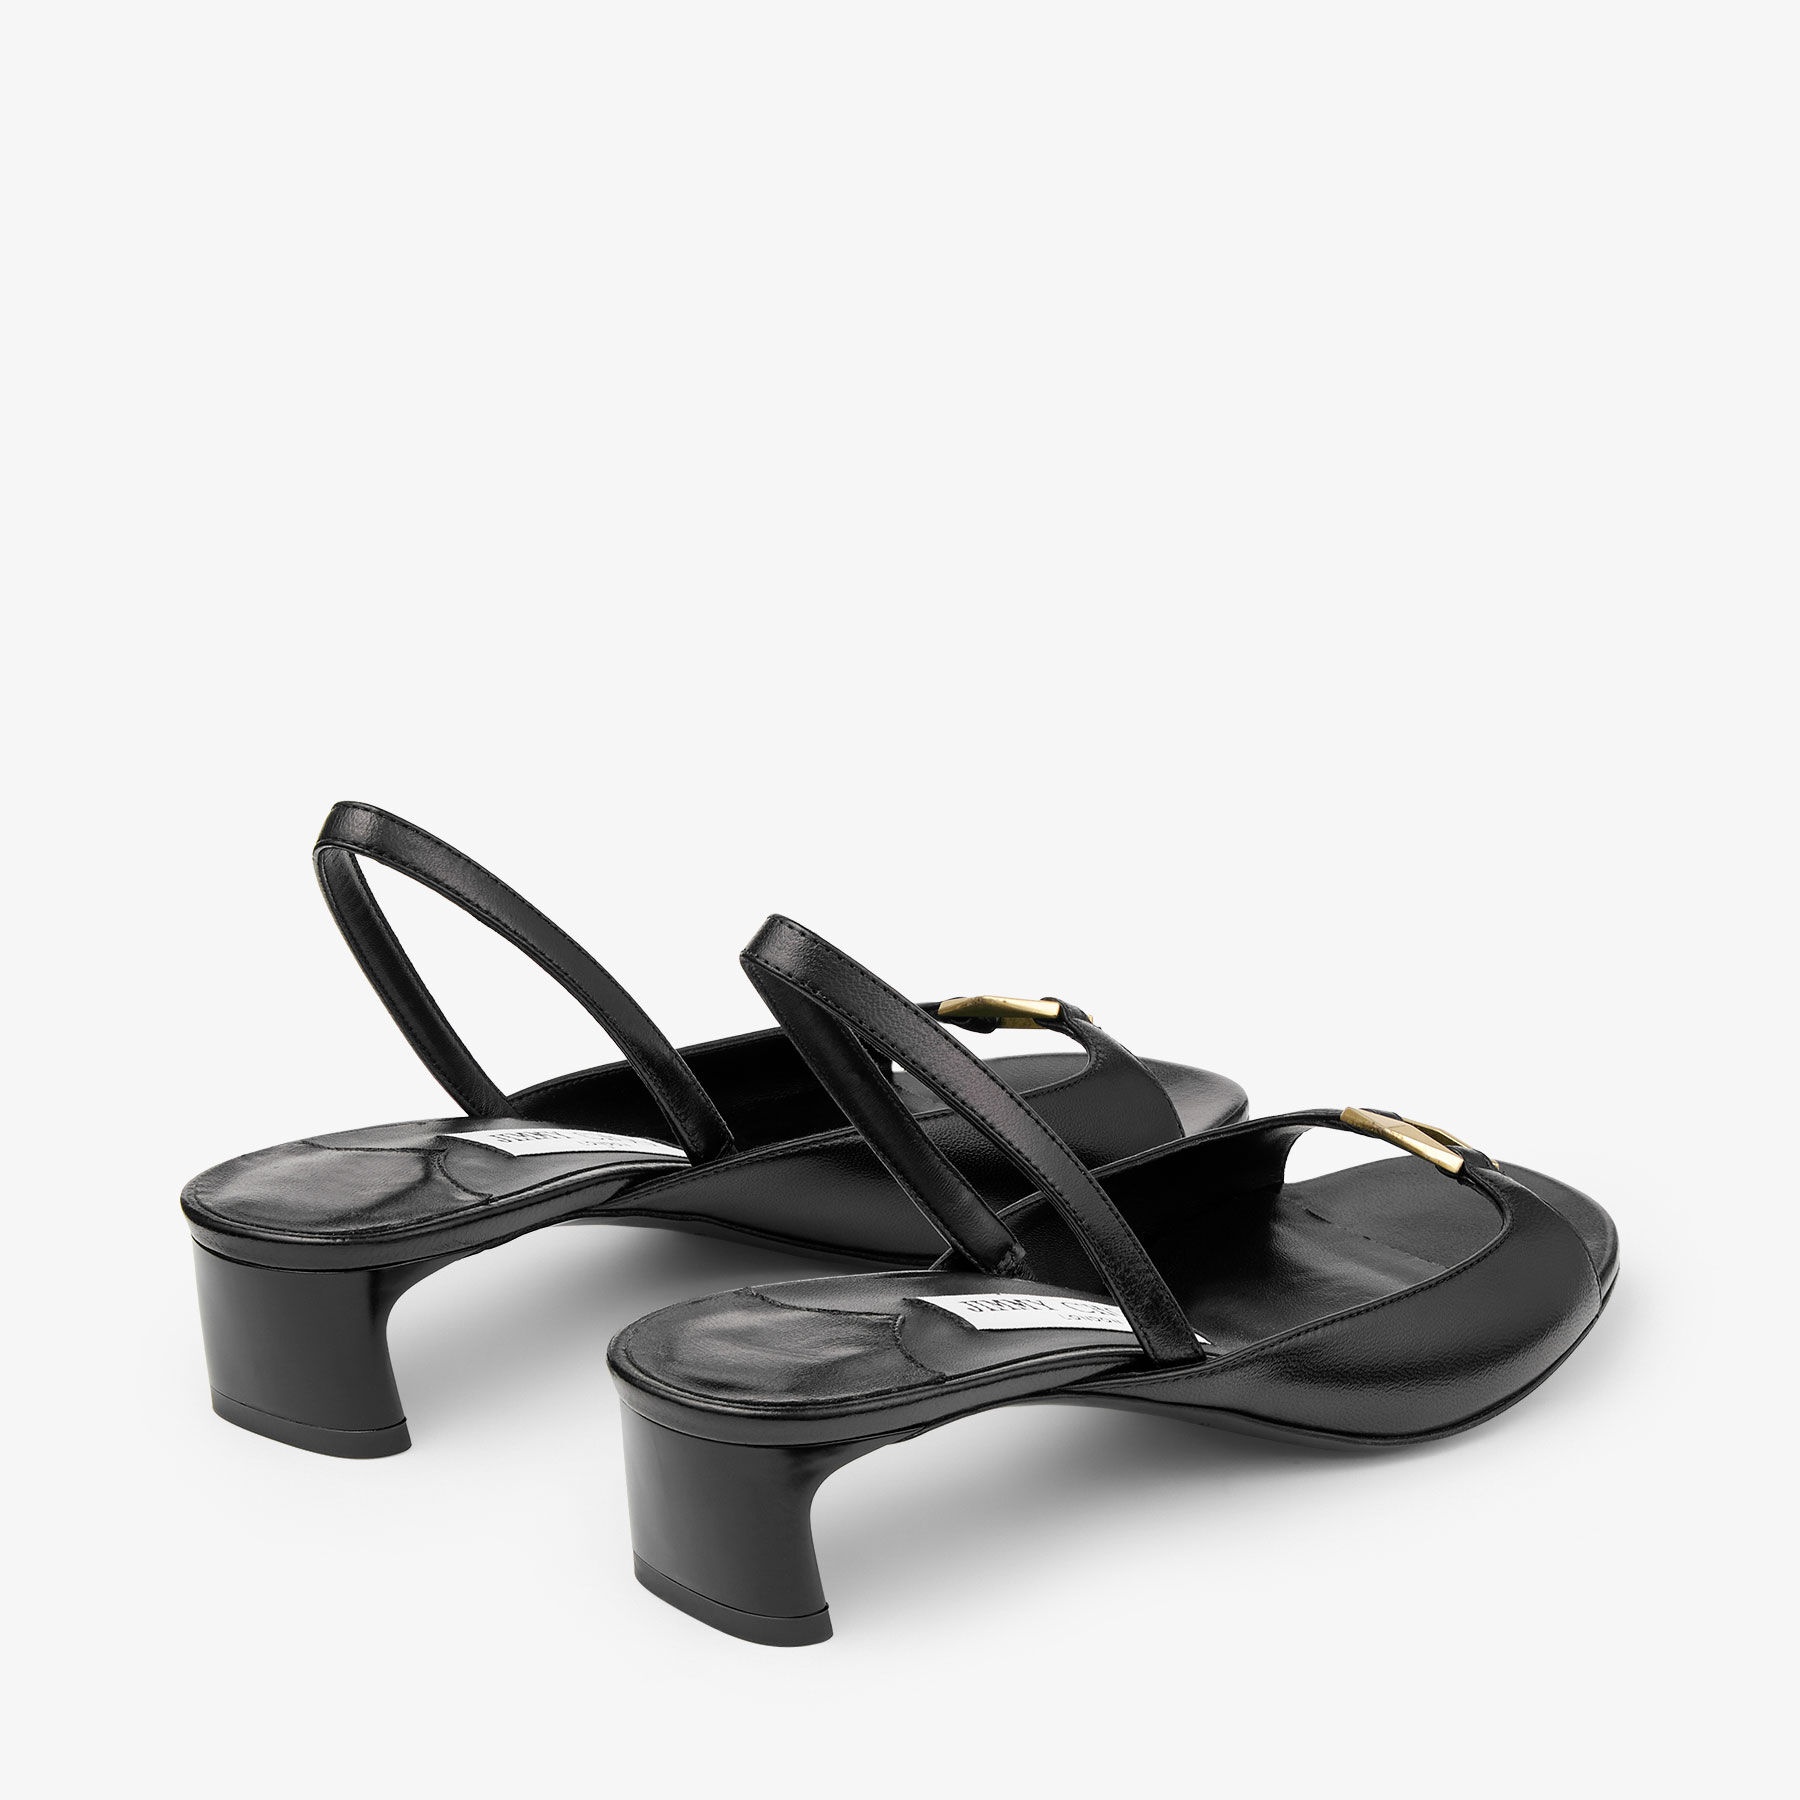 Lev 35
Black Nappa Leather Sandals - 5